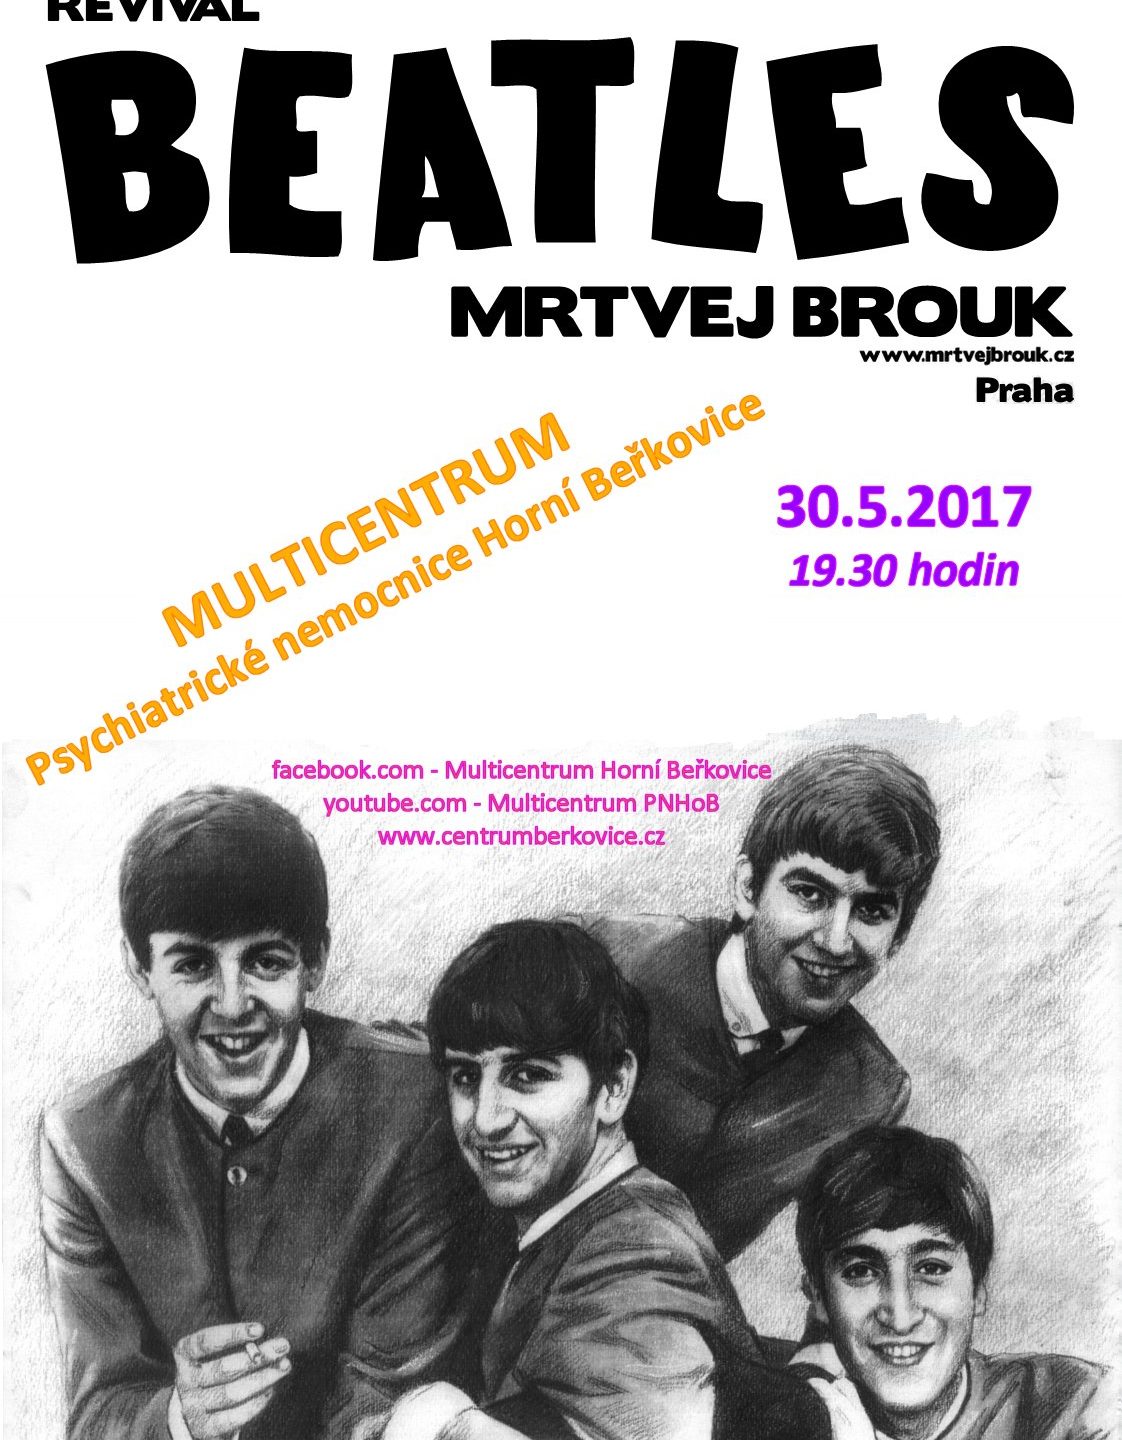 MRTVEJ BROUK (Beatles revival)